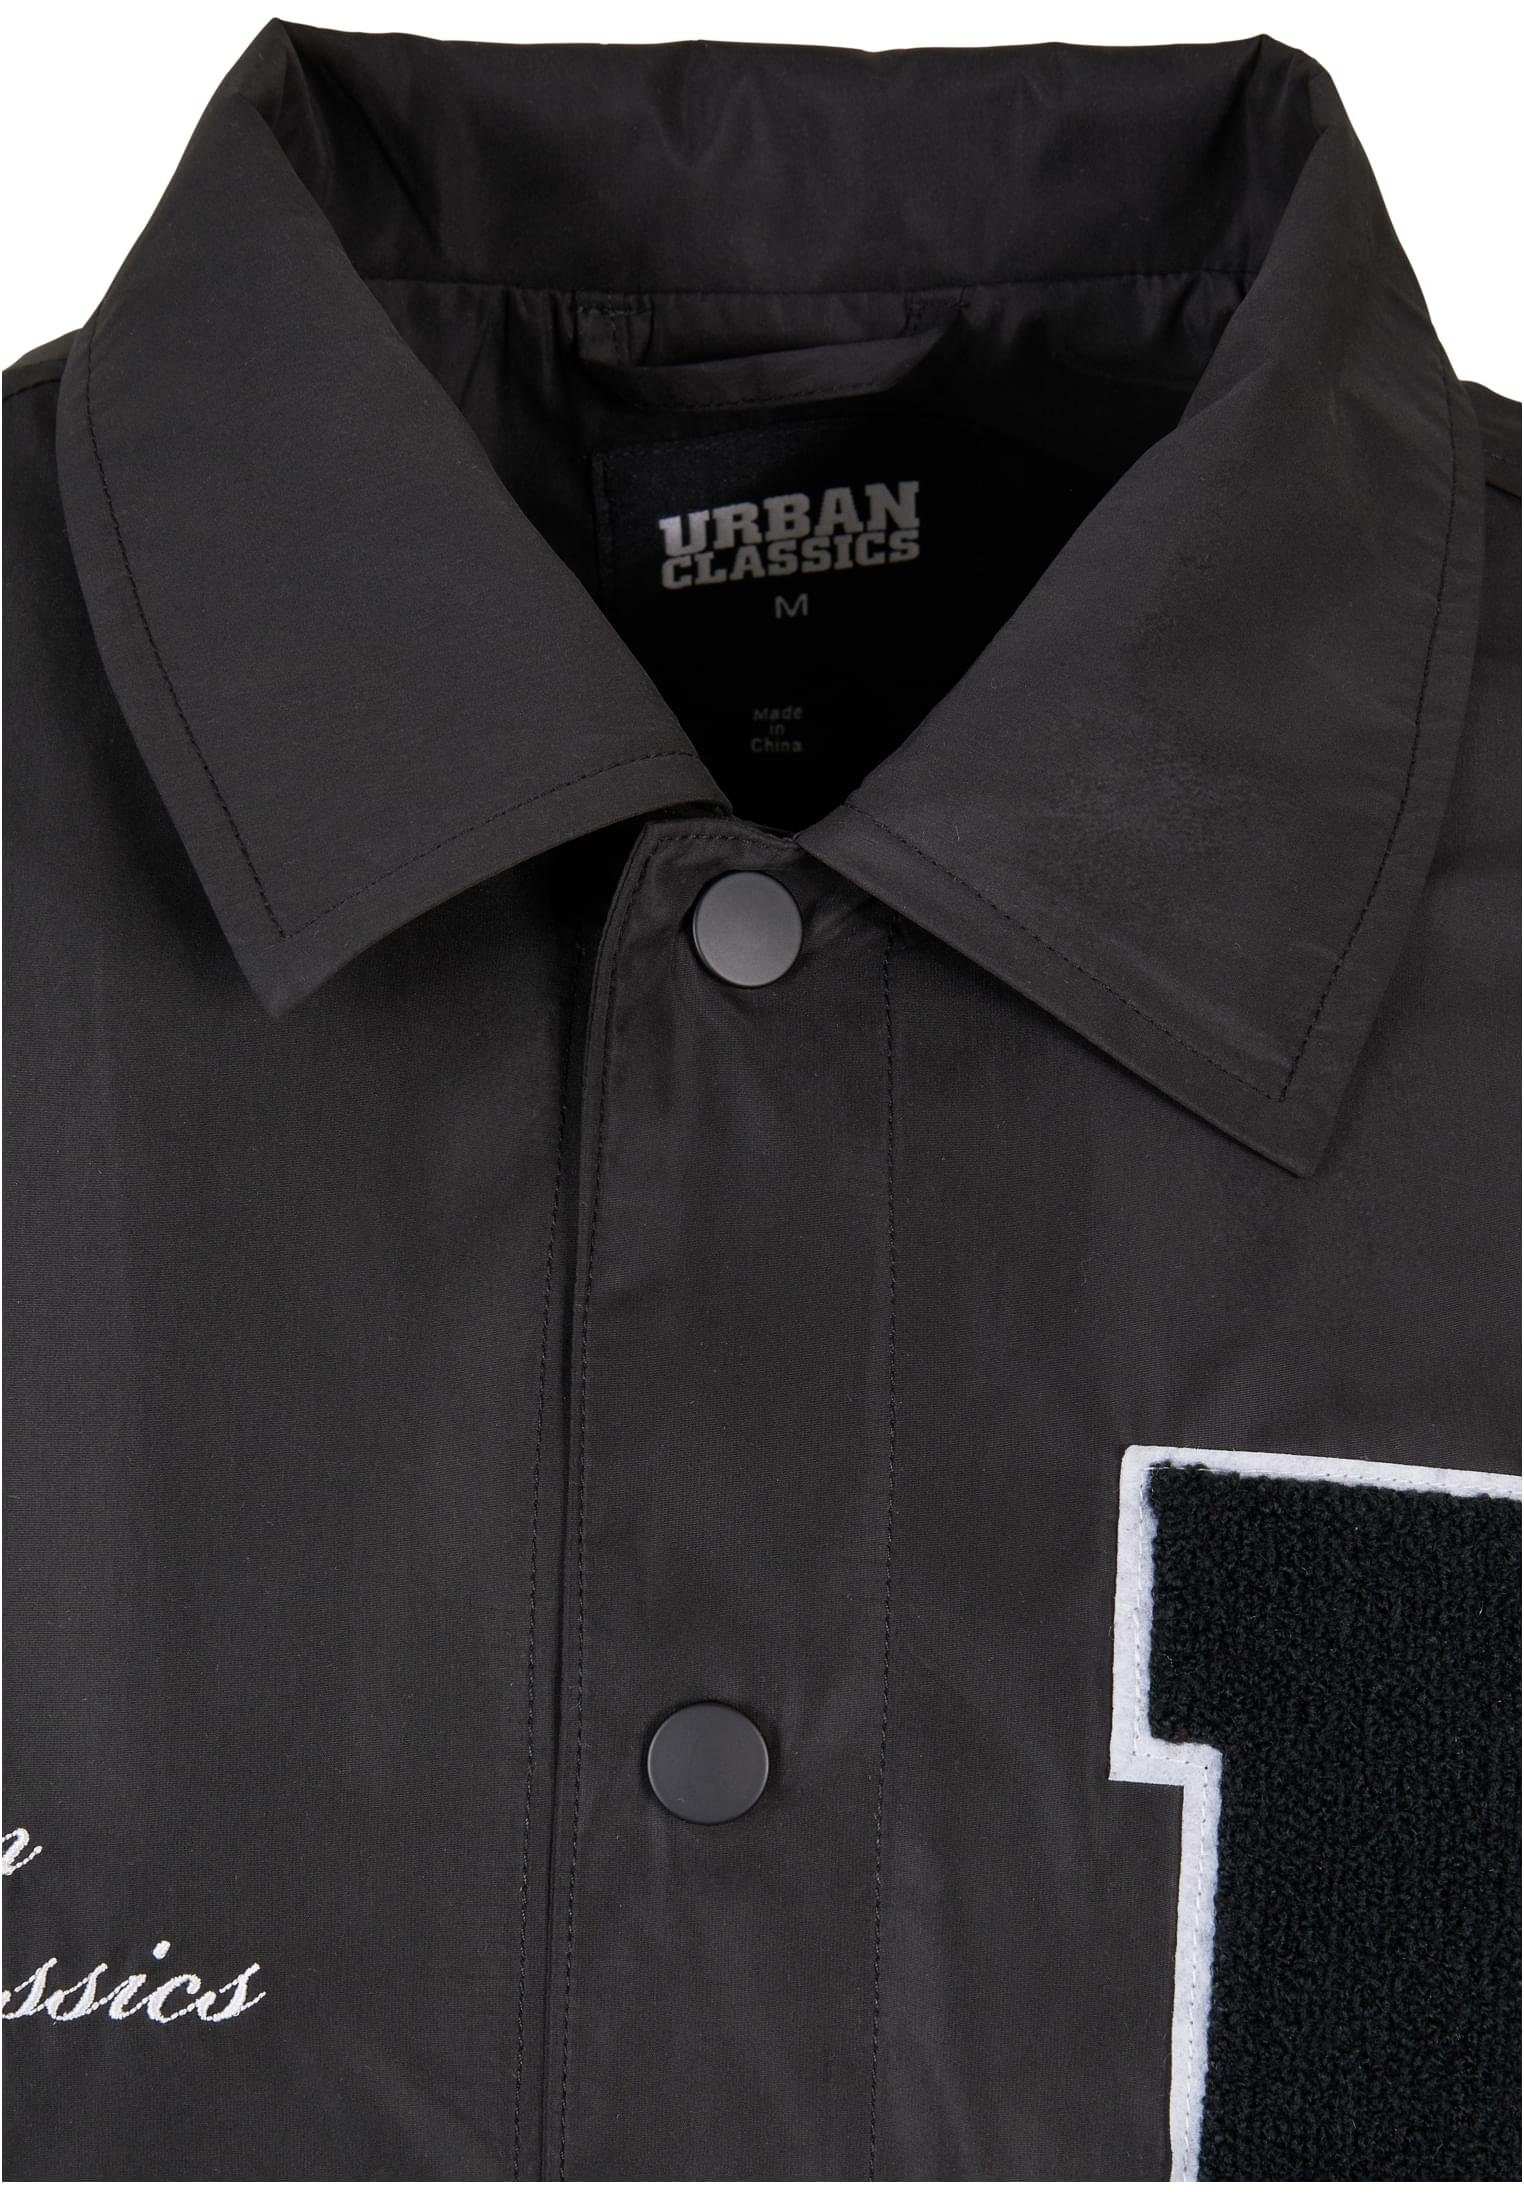 URBAN CLASSICS Herren (1-St) College Sports Outdoorjacke Jacket